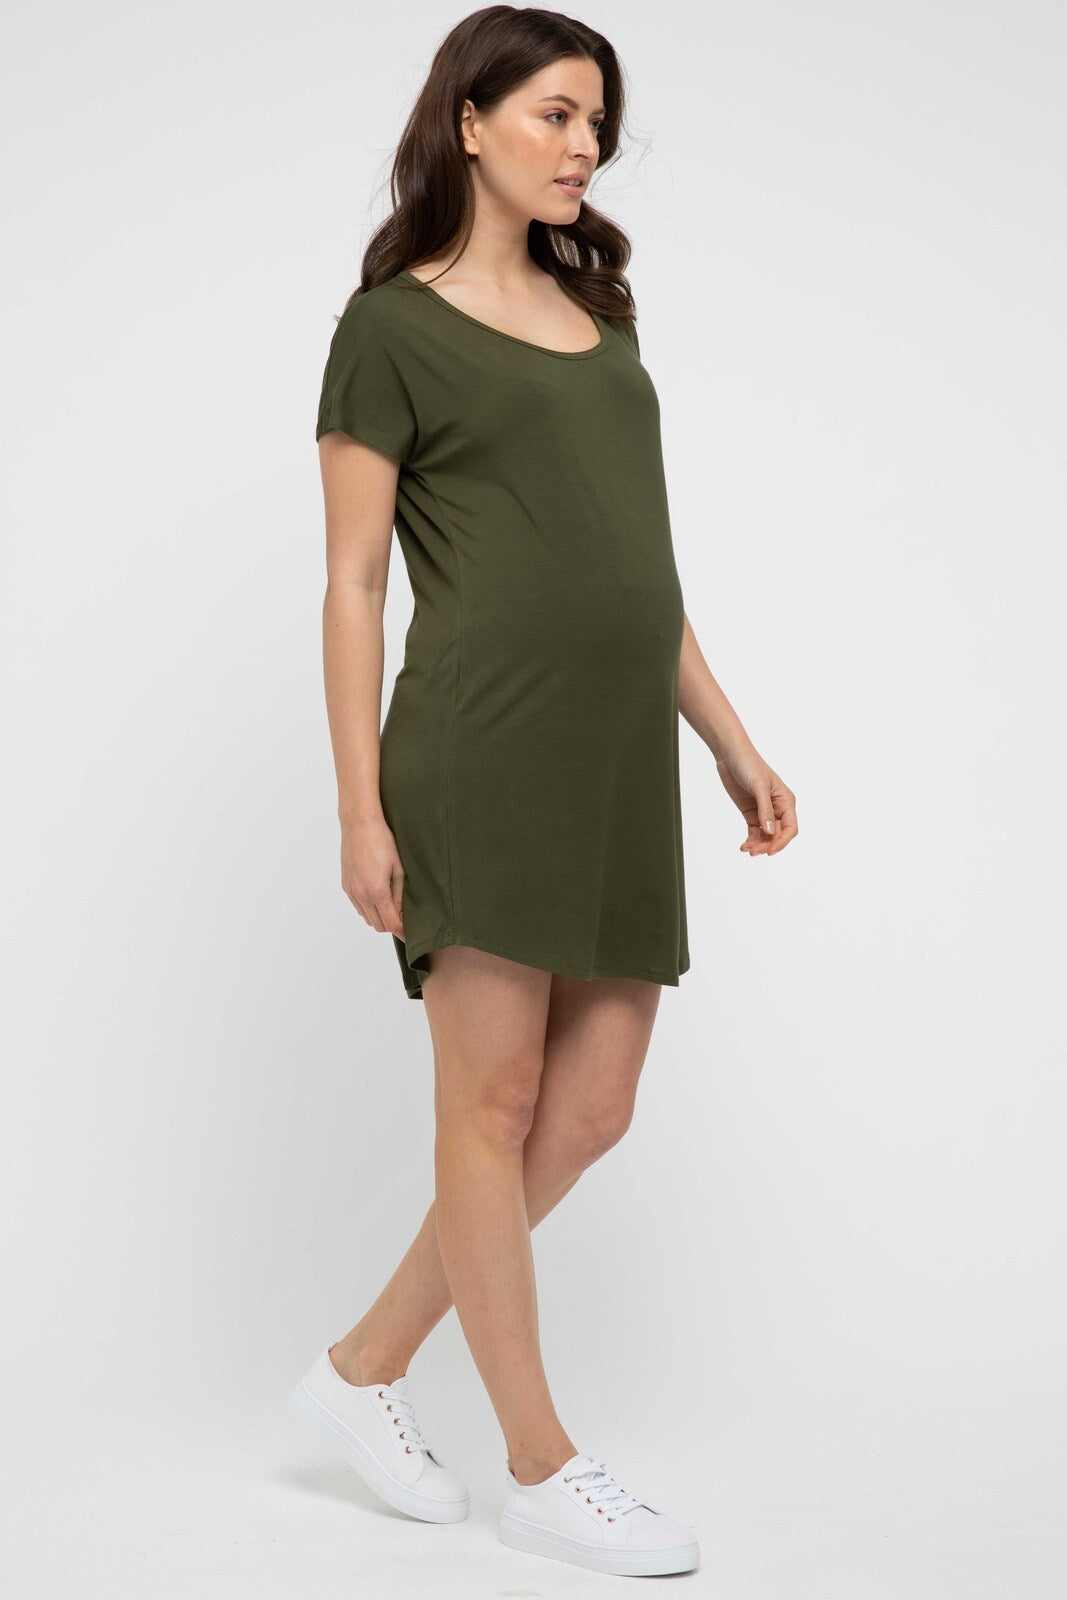 Organic Bamboo Niah T-Shirt Maternity Dress Dress from Bamboo Body maternity online store brisbane sydney perth australia